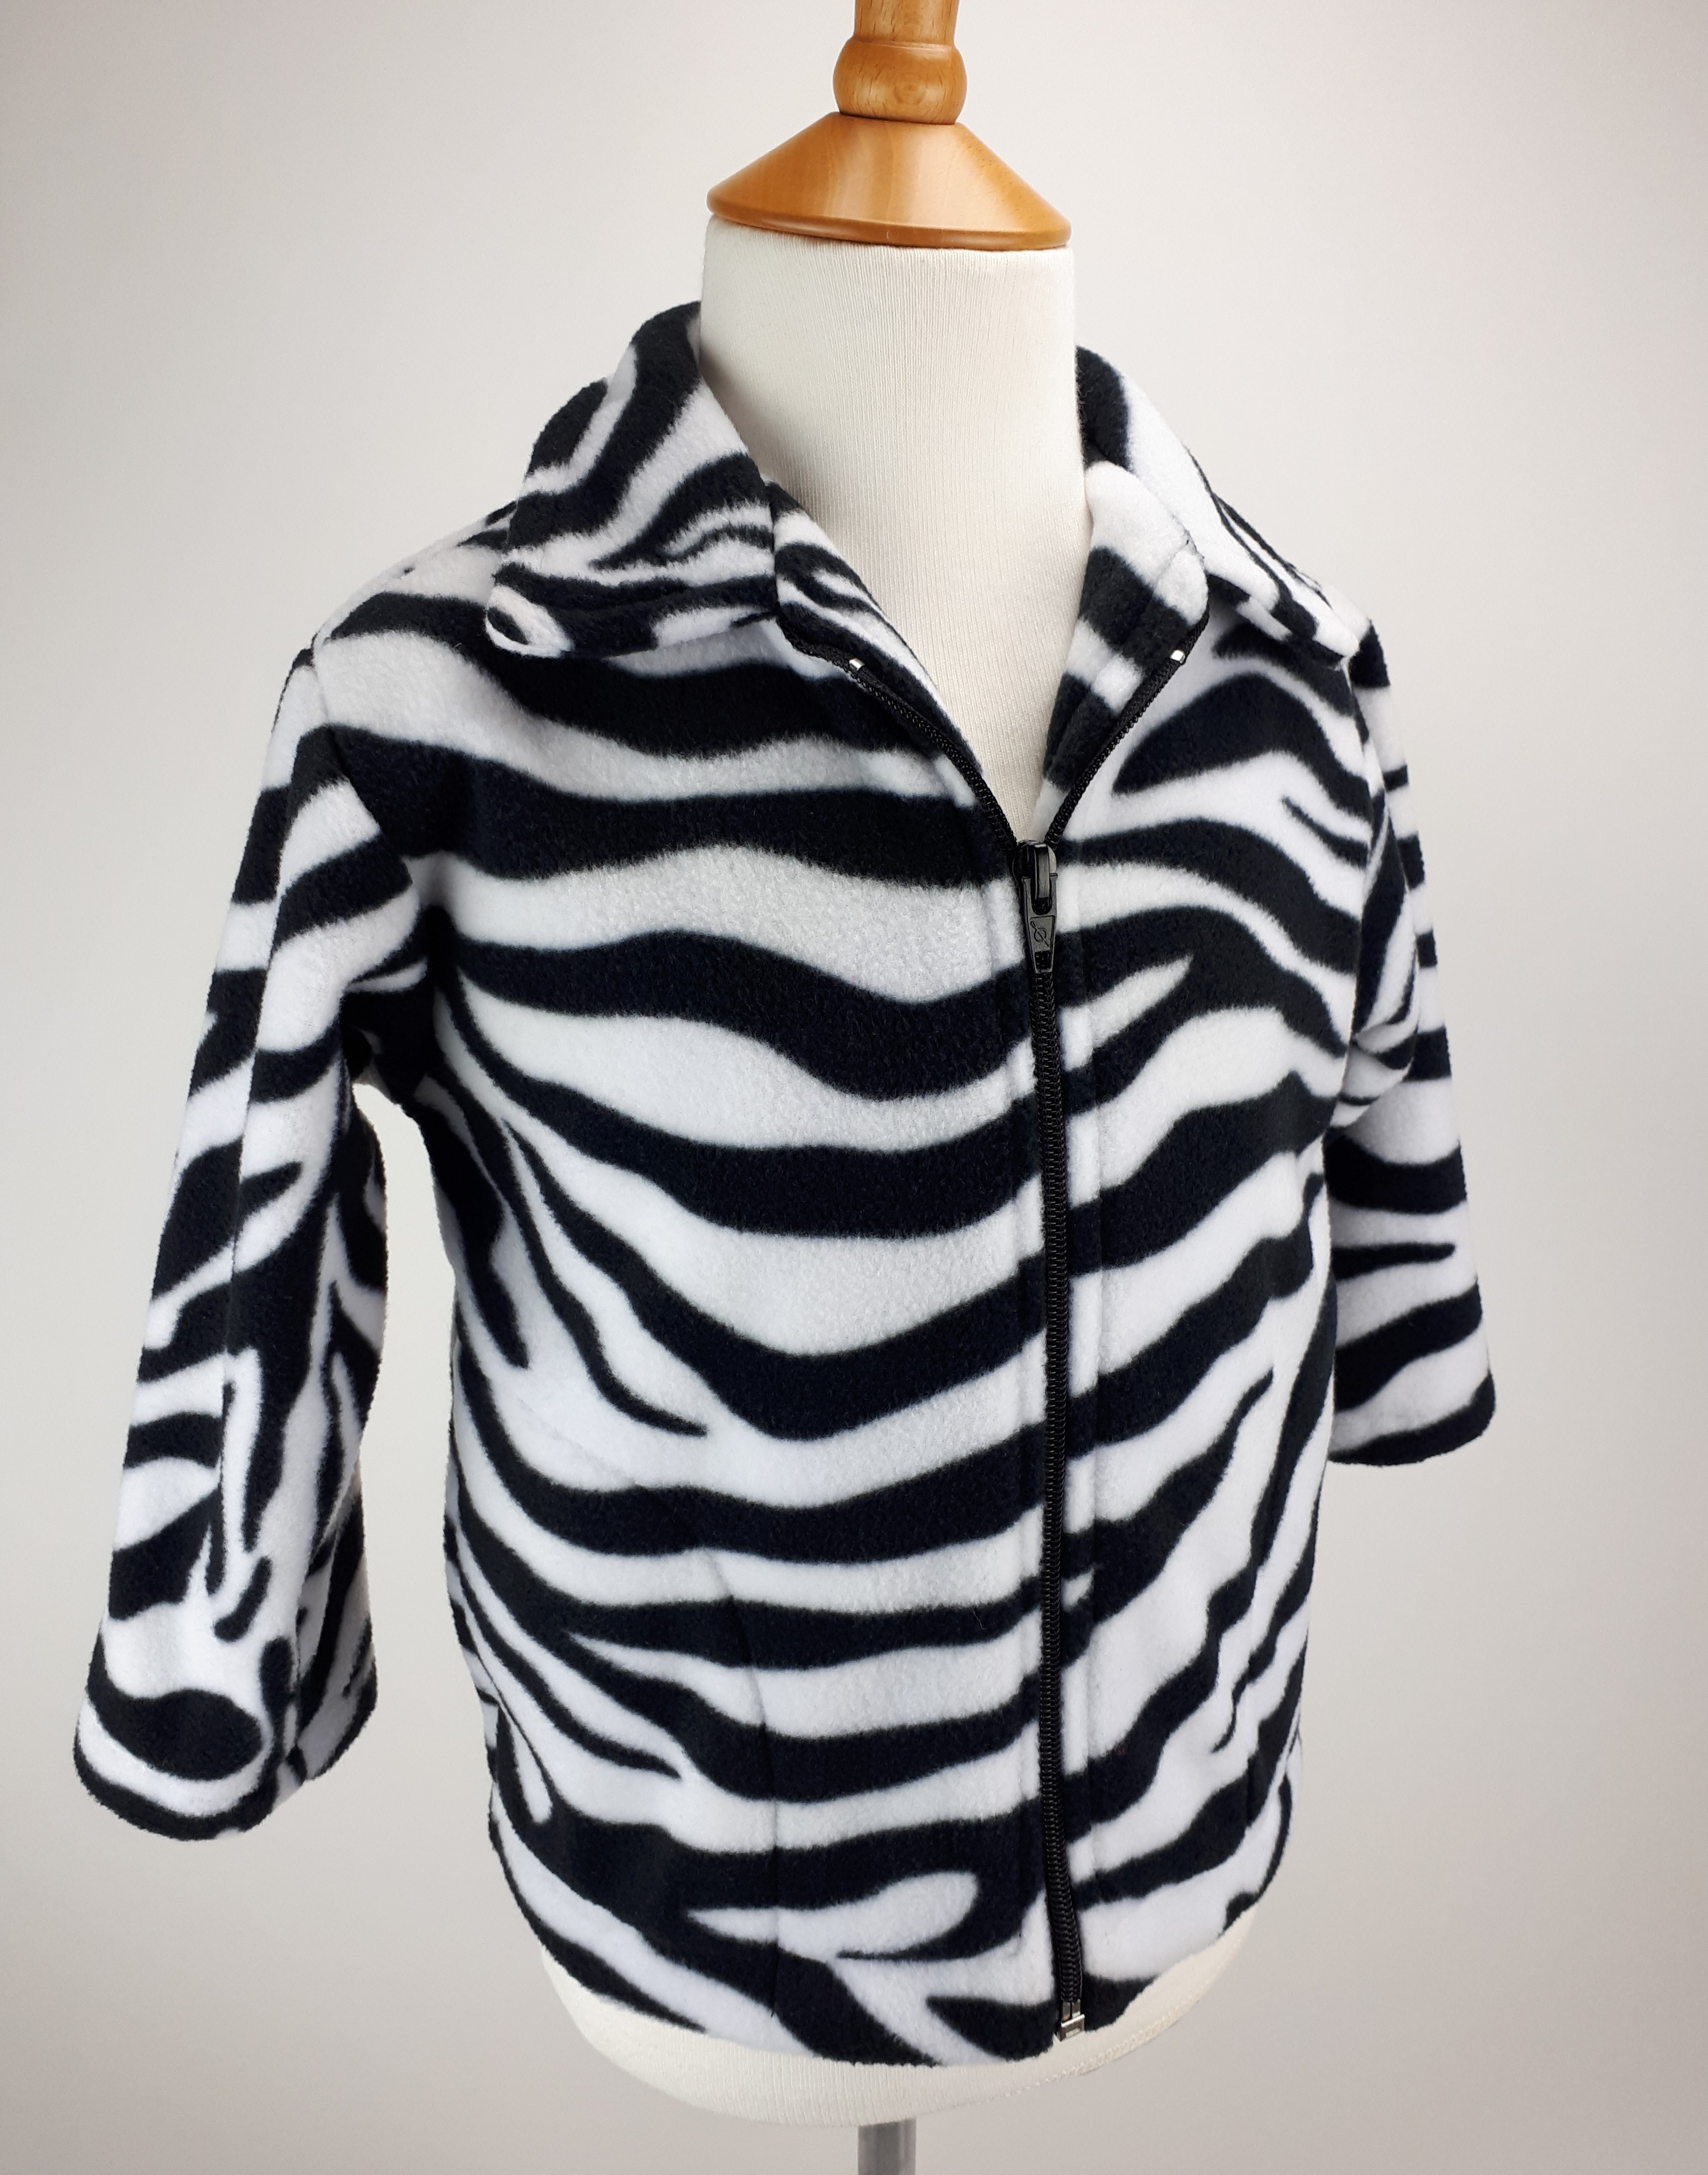 Zebra Jacket